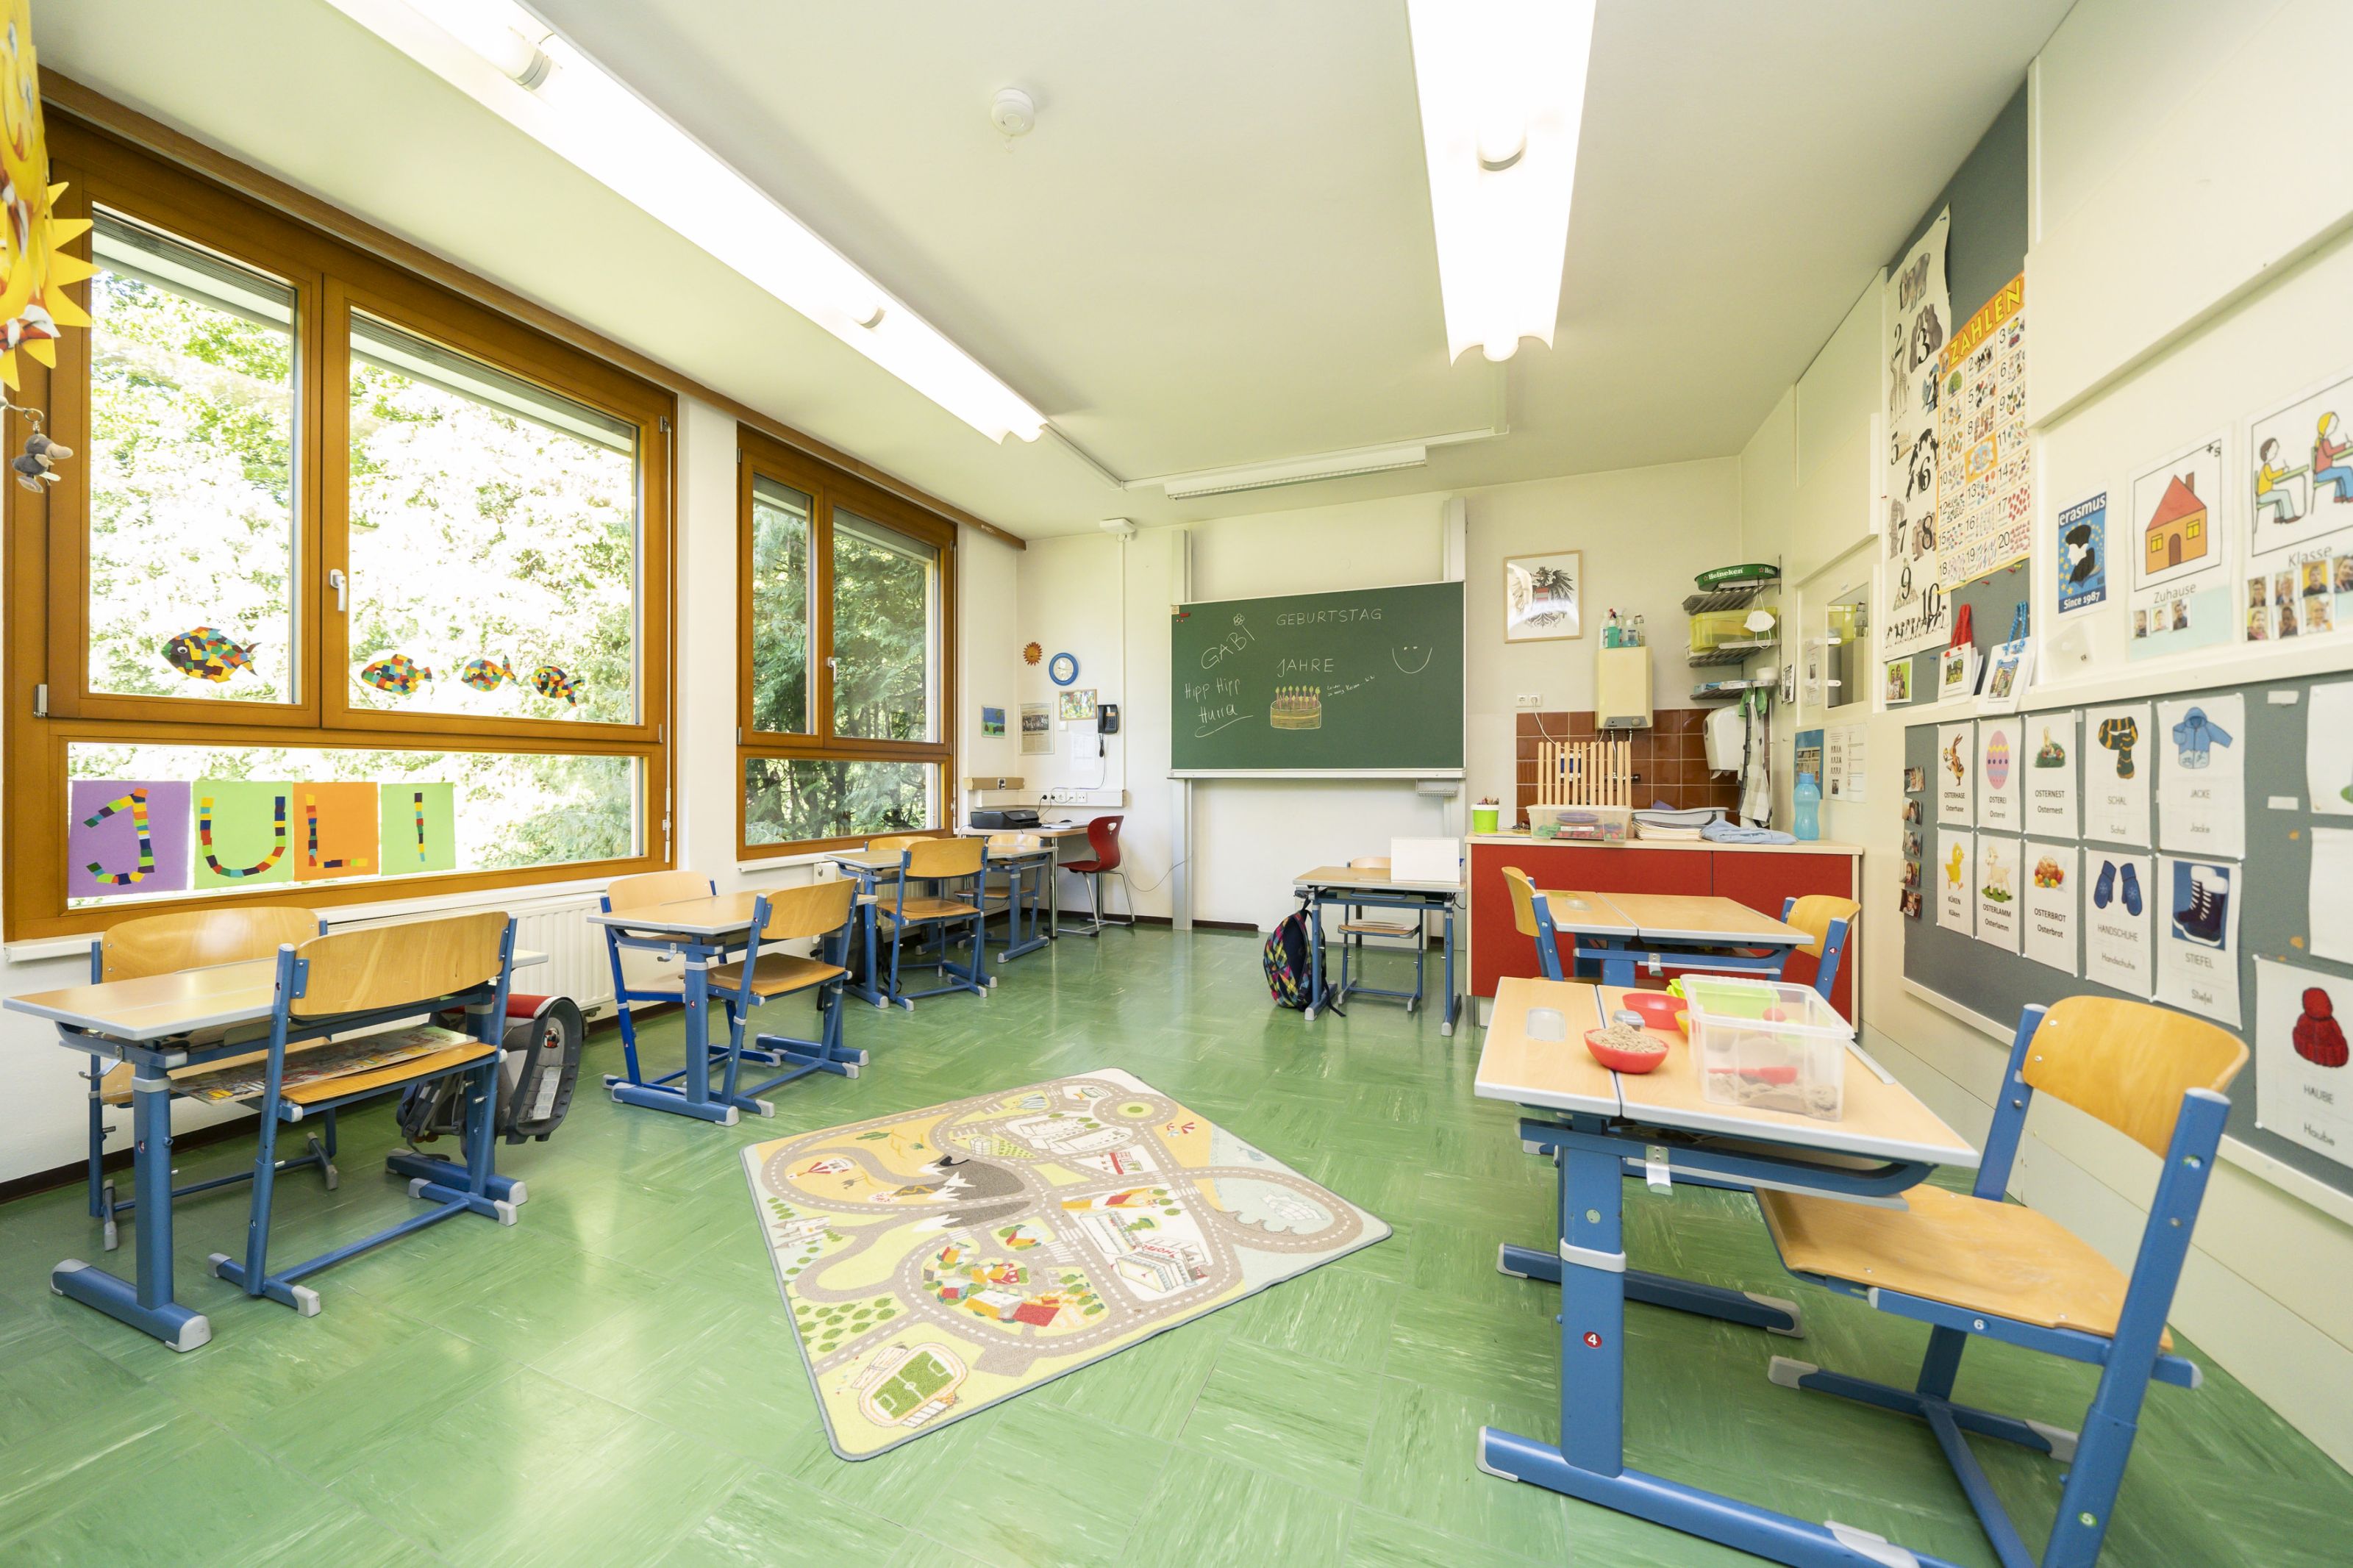 Sonderschule Rosenhain - Klassenraum